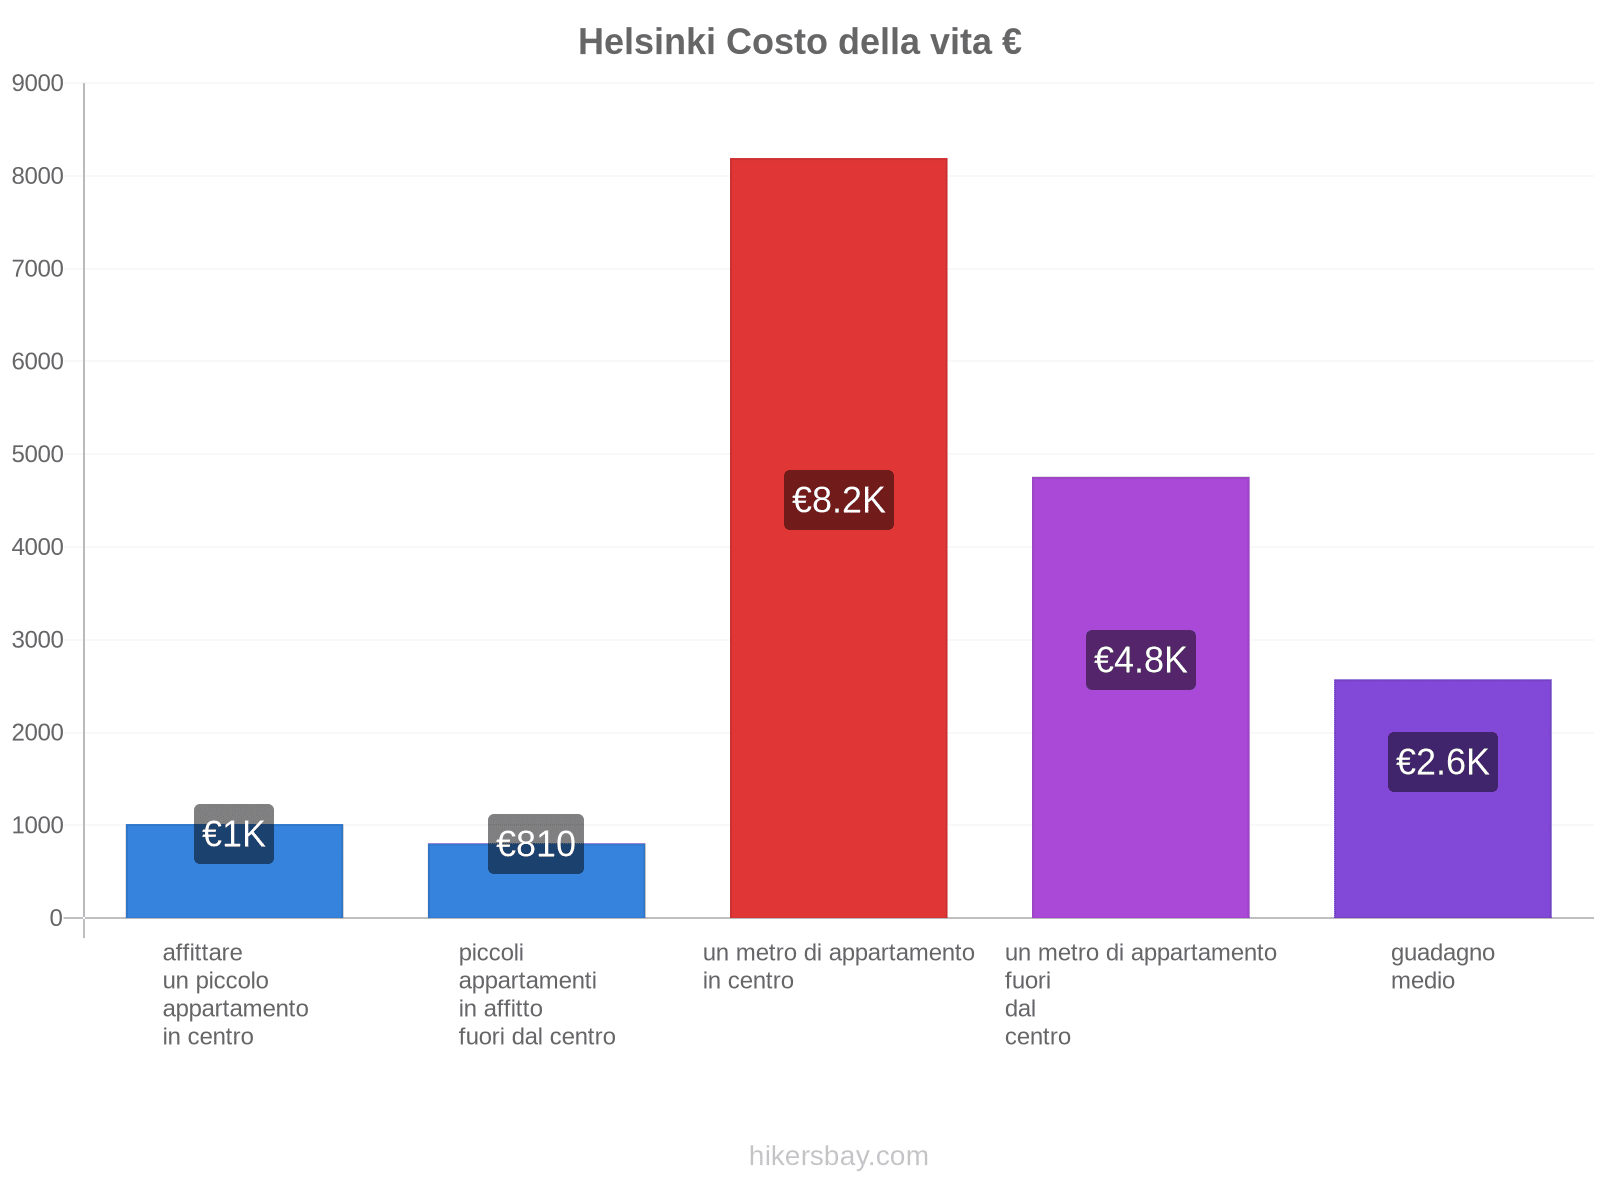 Helsinki costo della vita hikersbay.com